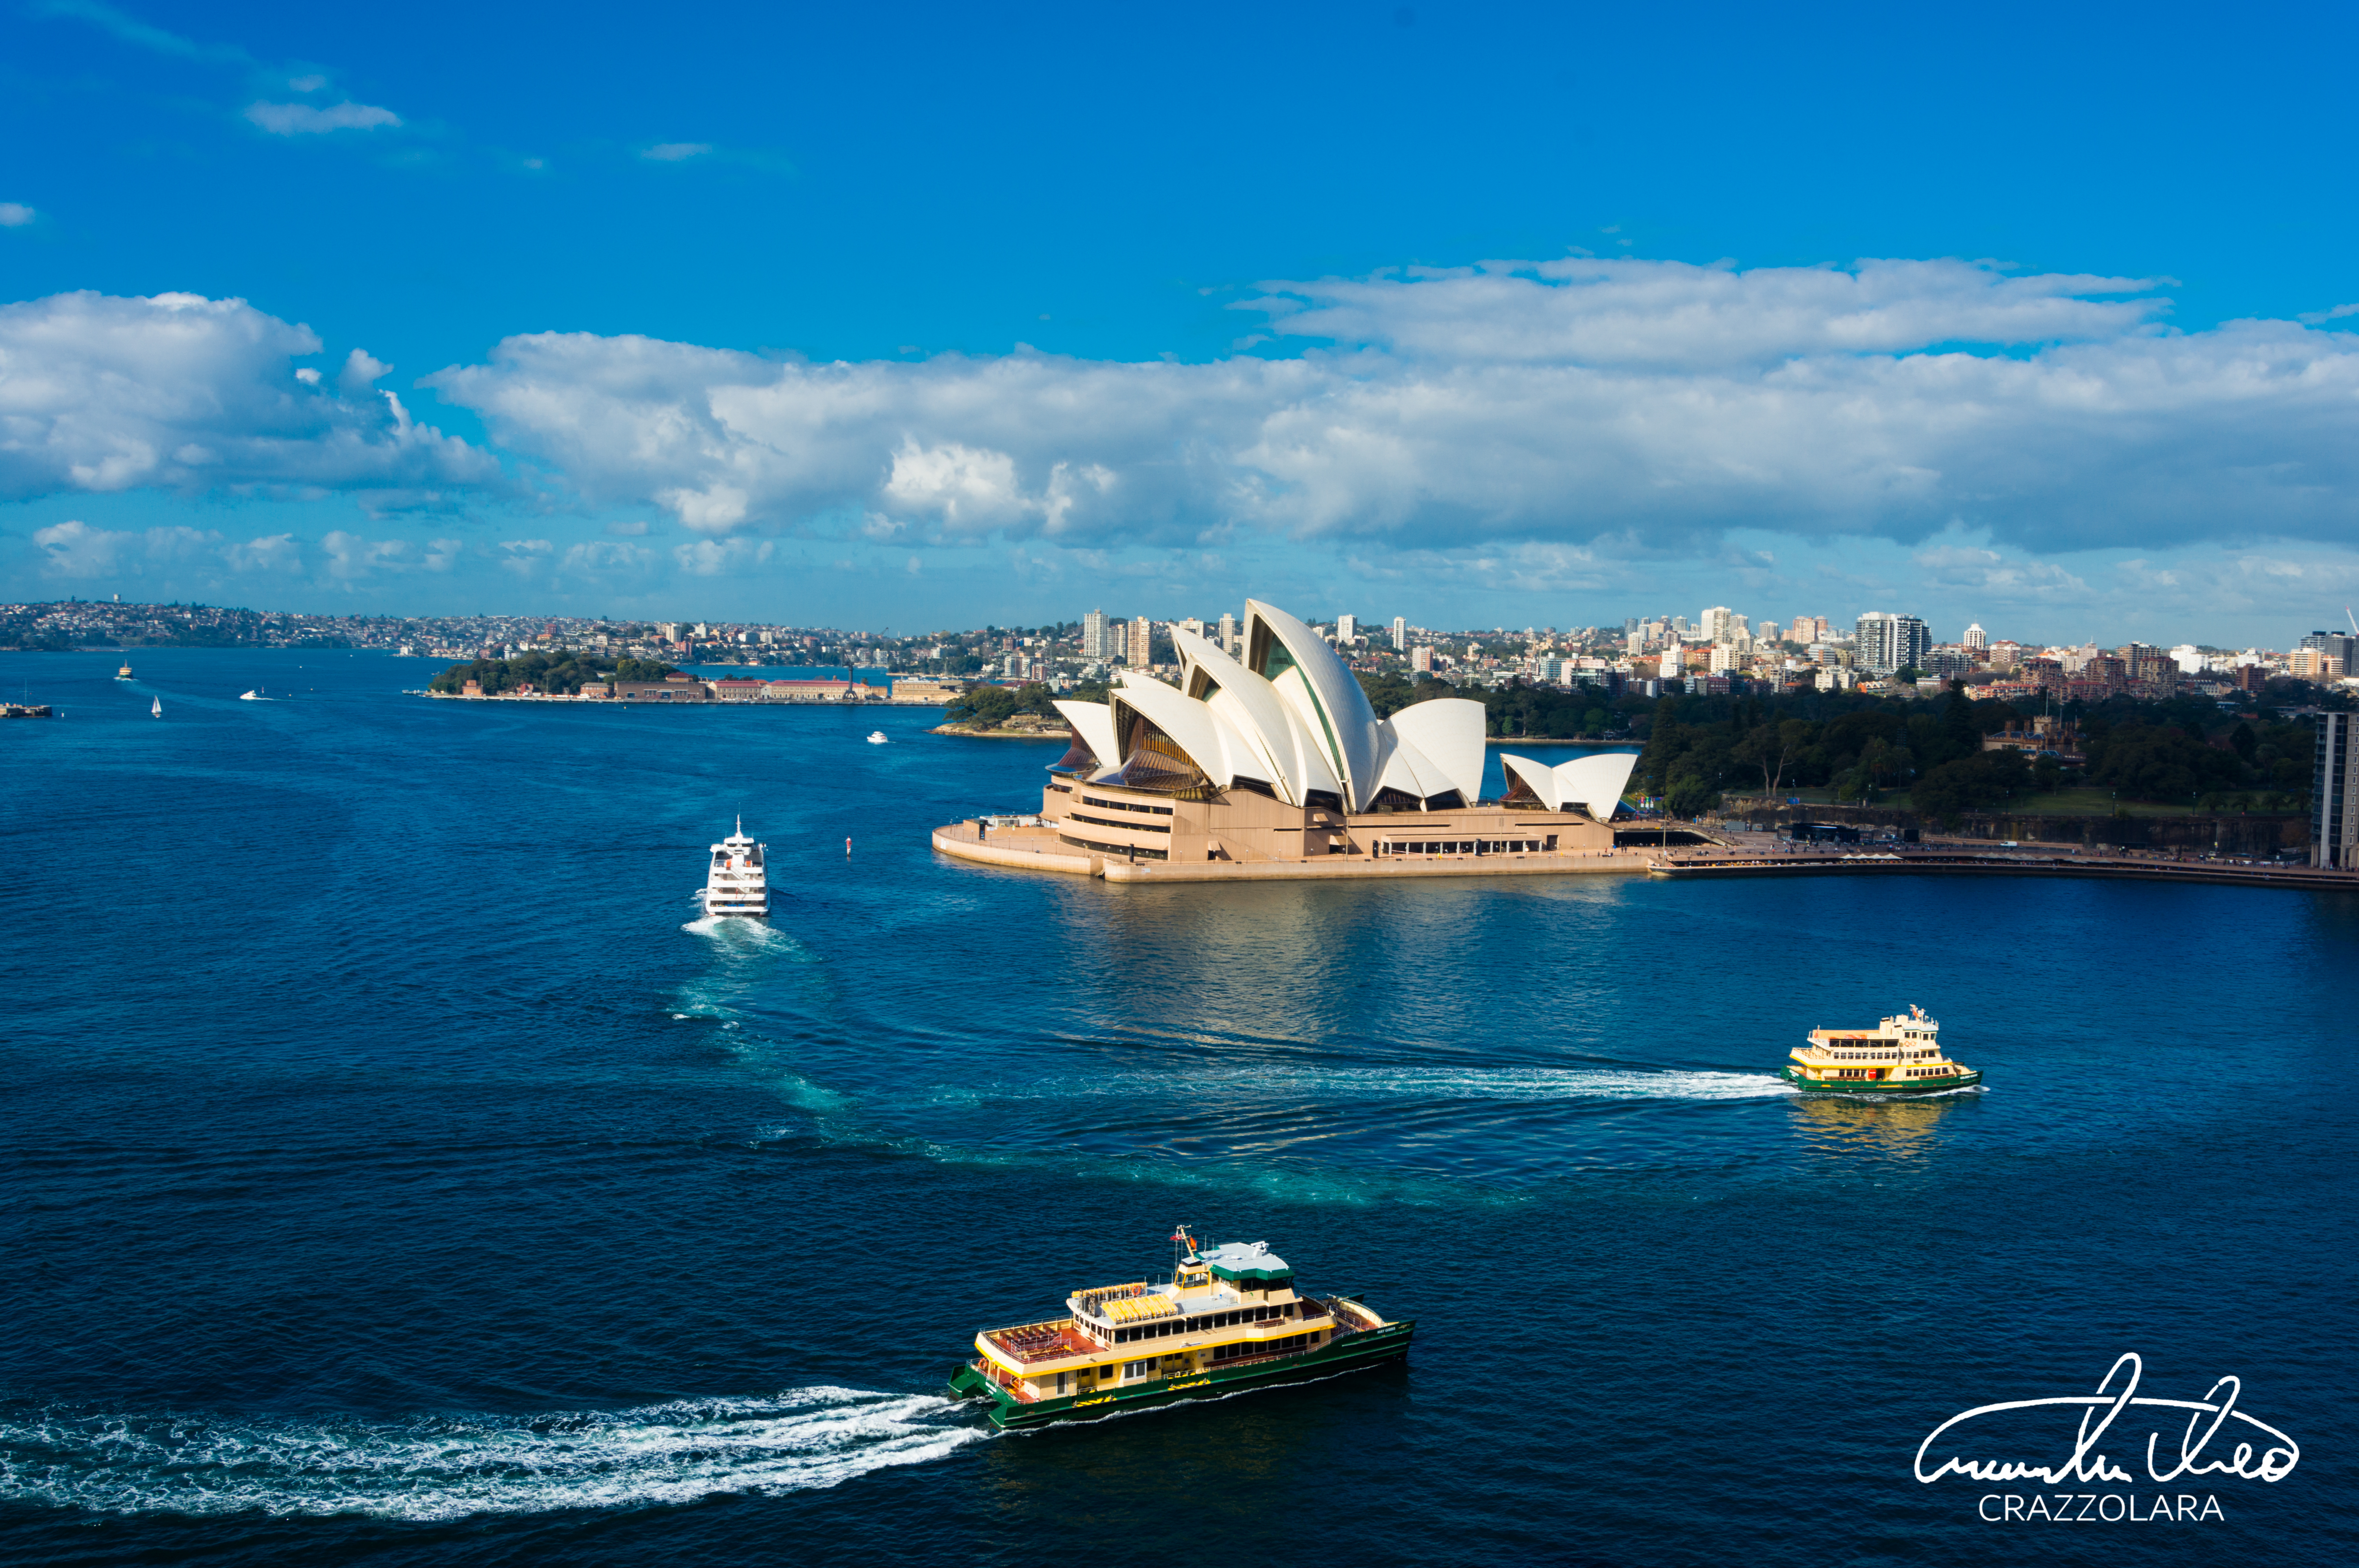 australia, sydney, sydney opera house, ships, harbor, cities, theatre